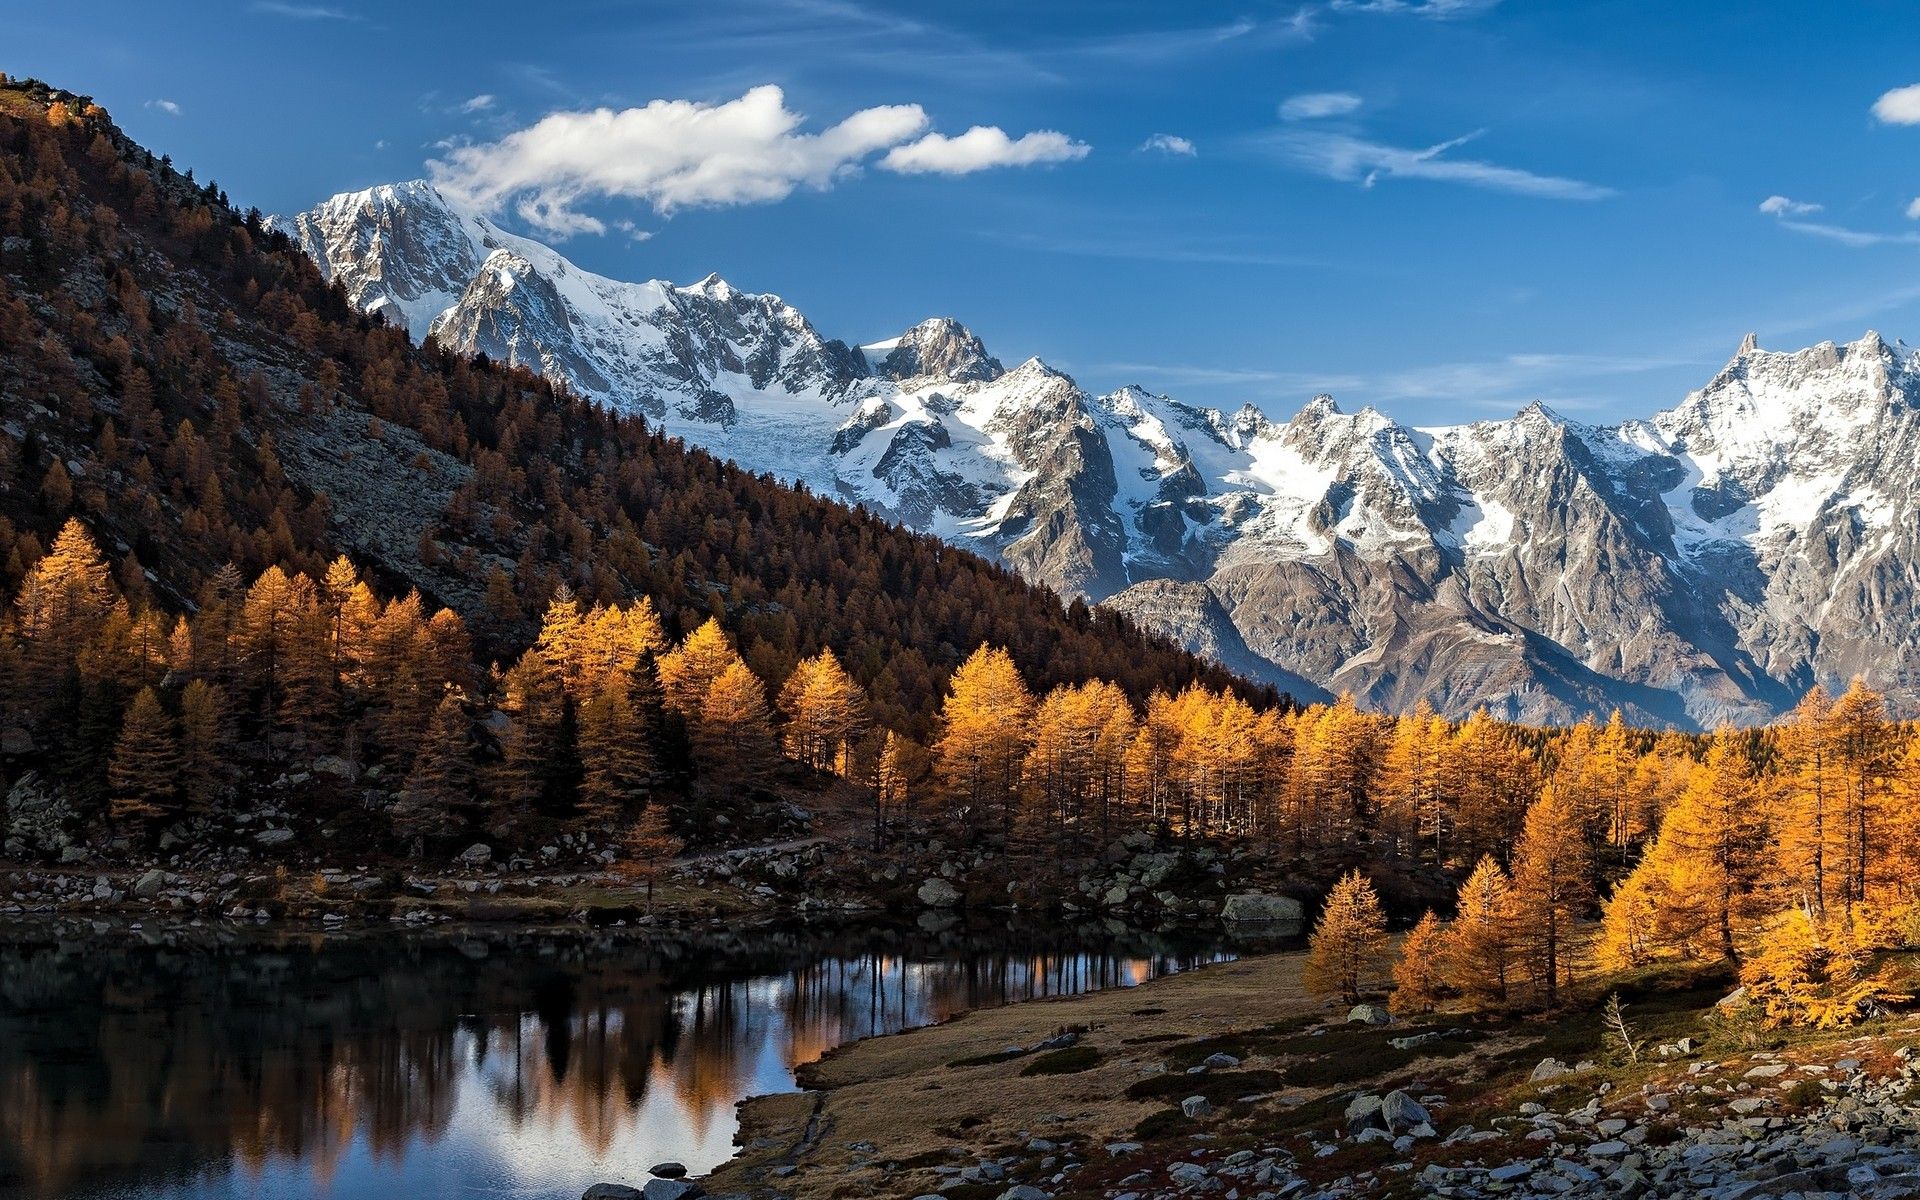 #Italy, #nature, #trees, #fall, #landscape, #forest, #Alps, #mountains, #lake, #snowy peak, wallpaper. Mocah.org HD Desktop Wallpaper